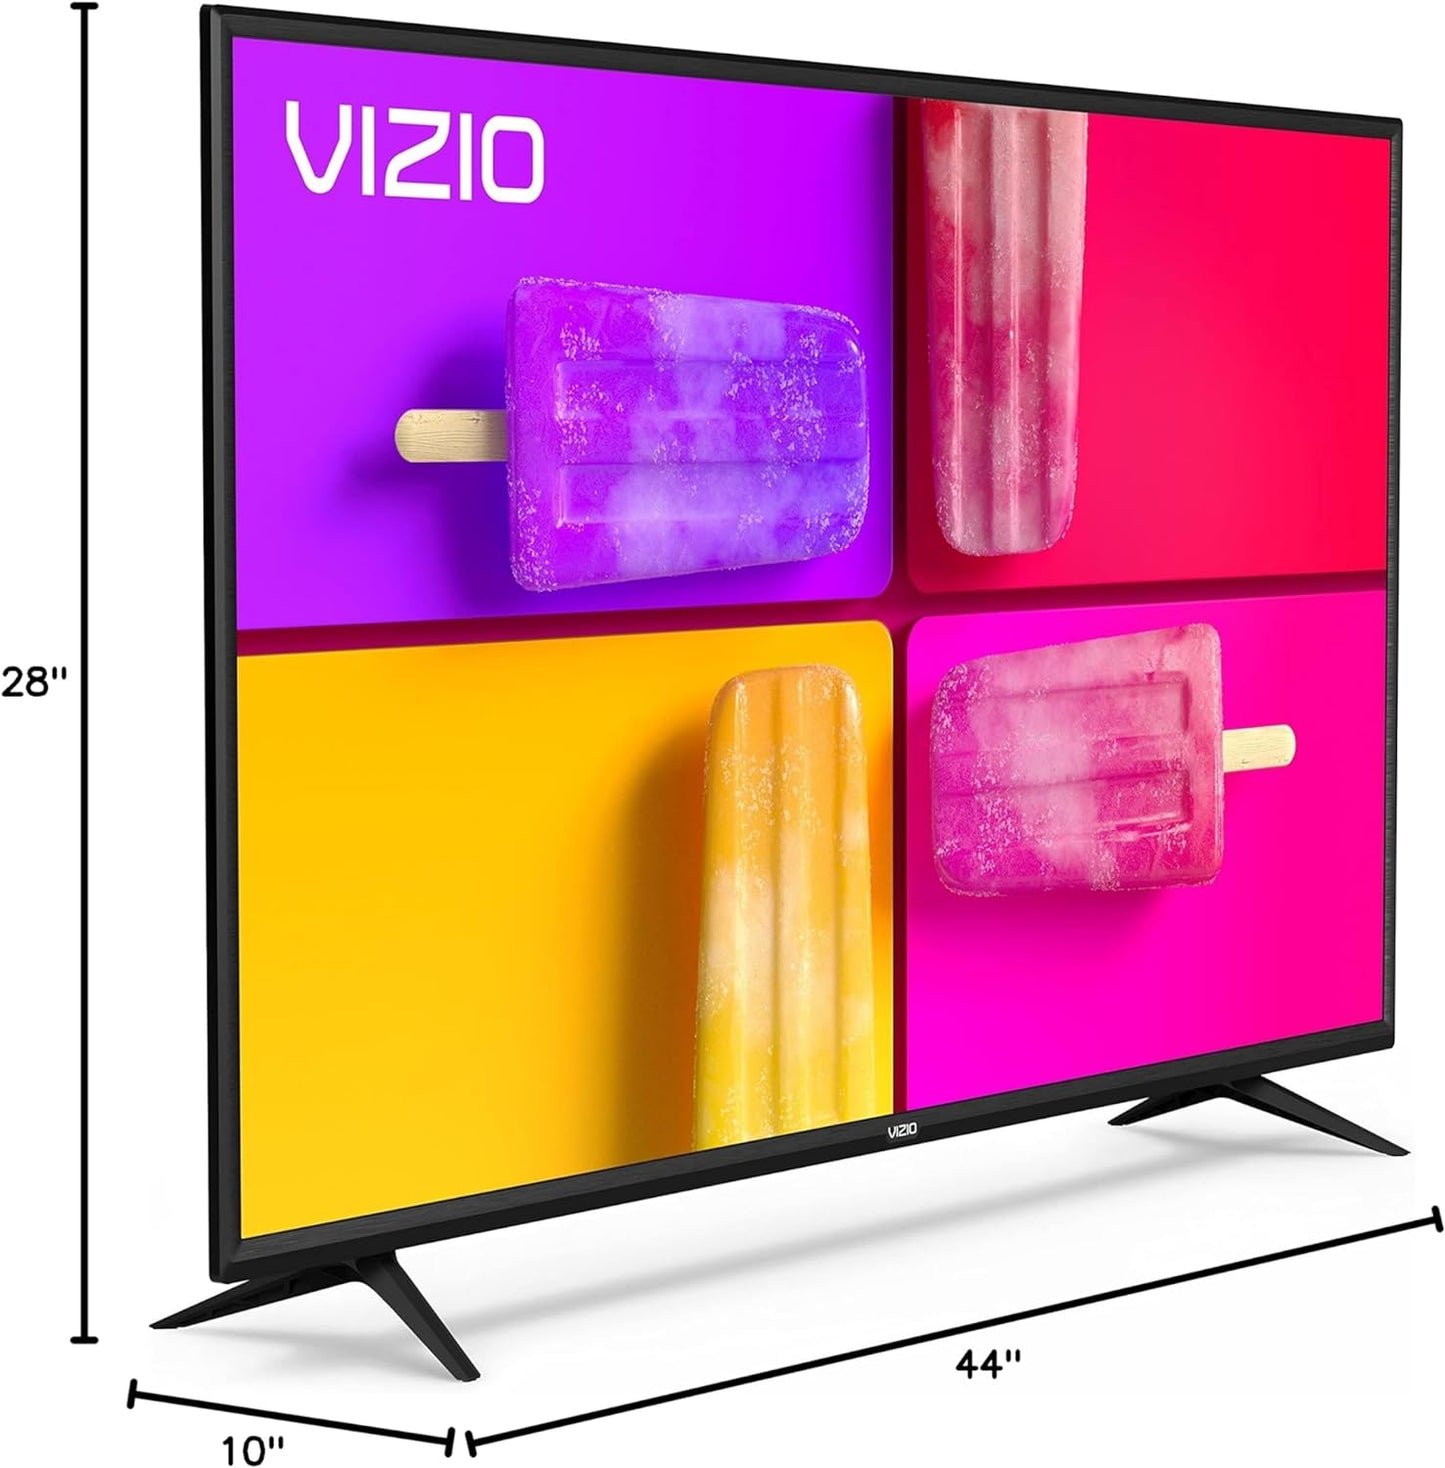 50-Inch V-Series 4K UHD LED Smart TV with Voice Remote, Dolby Vision, HDR10+, Alexa Compatibility, V505-J09, 2022 Model